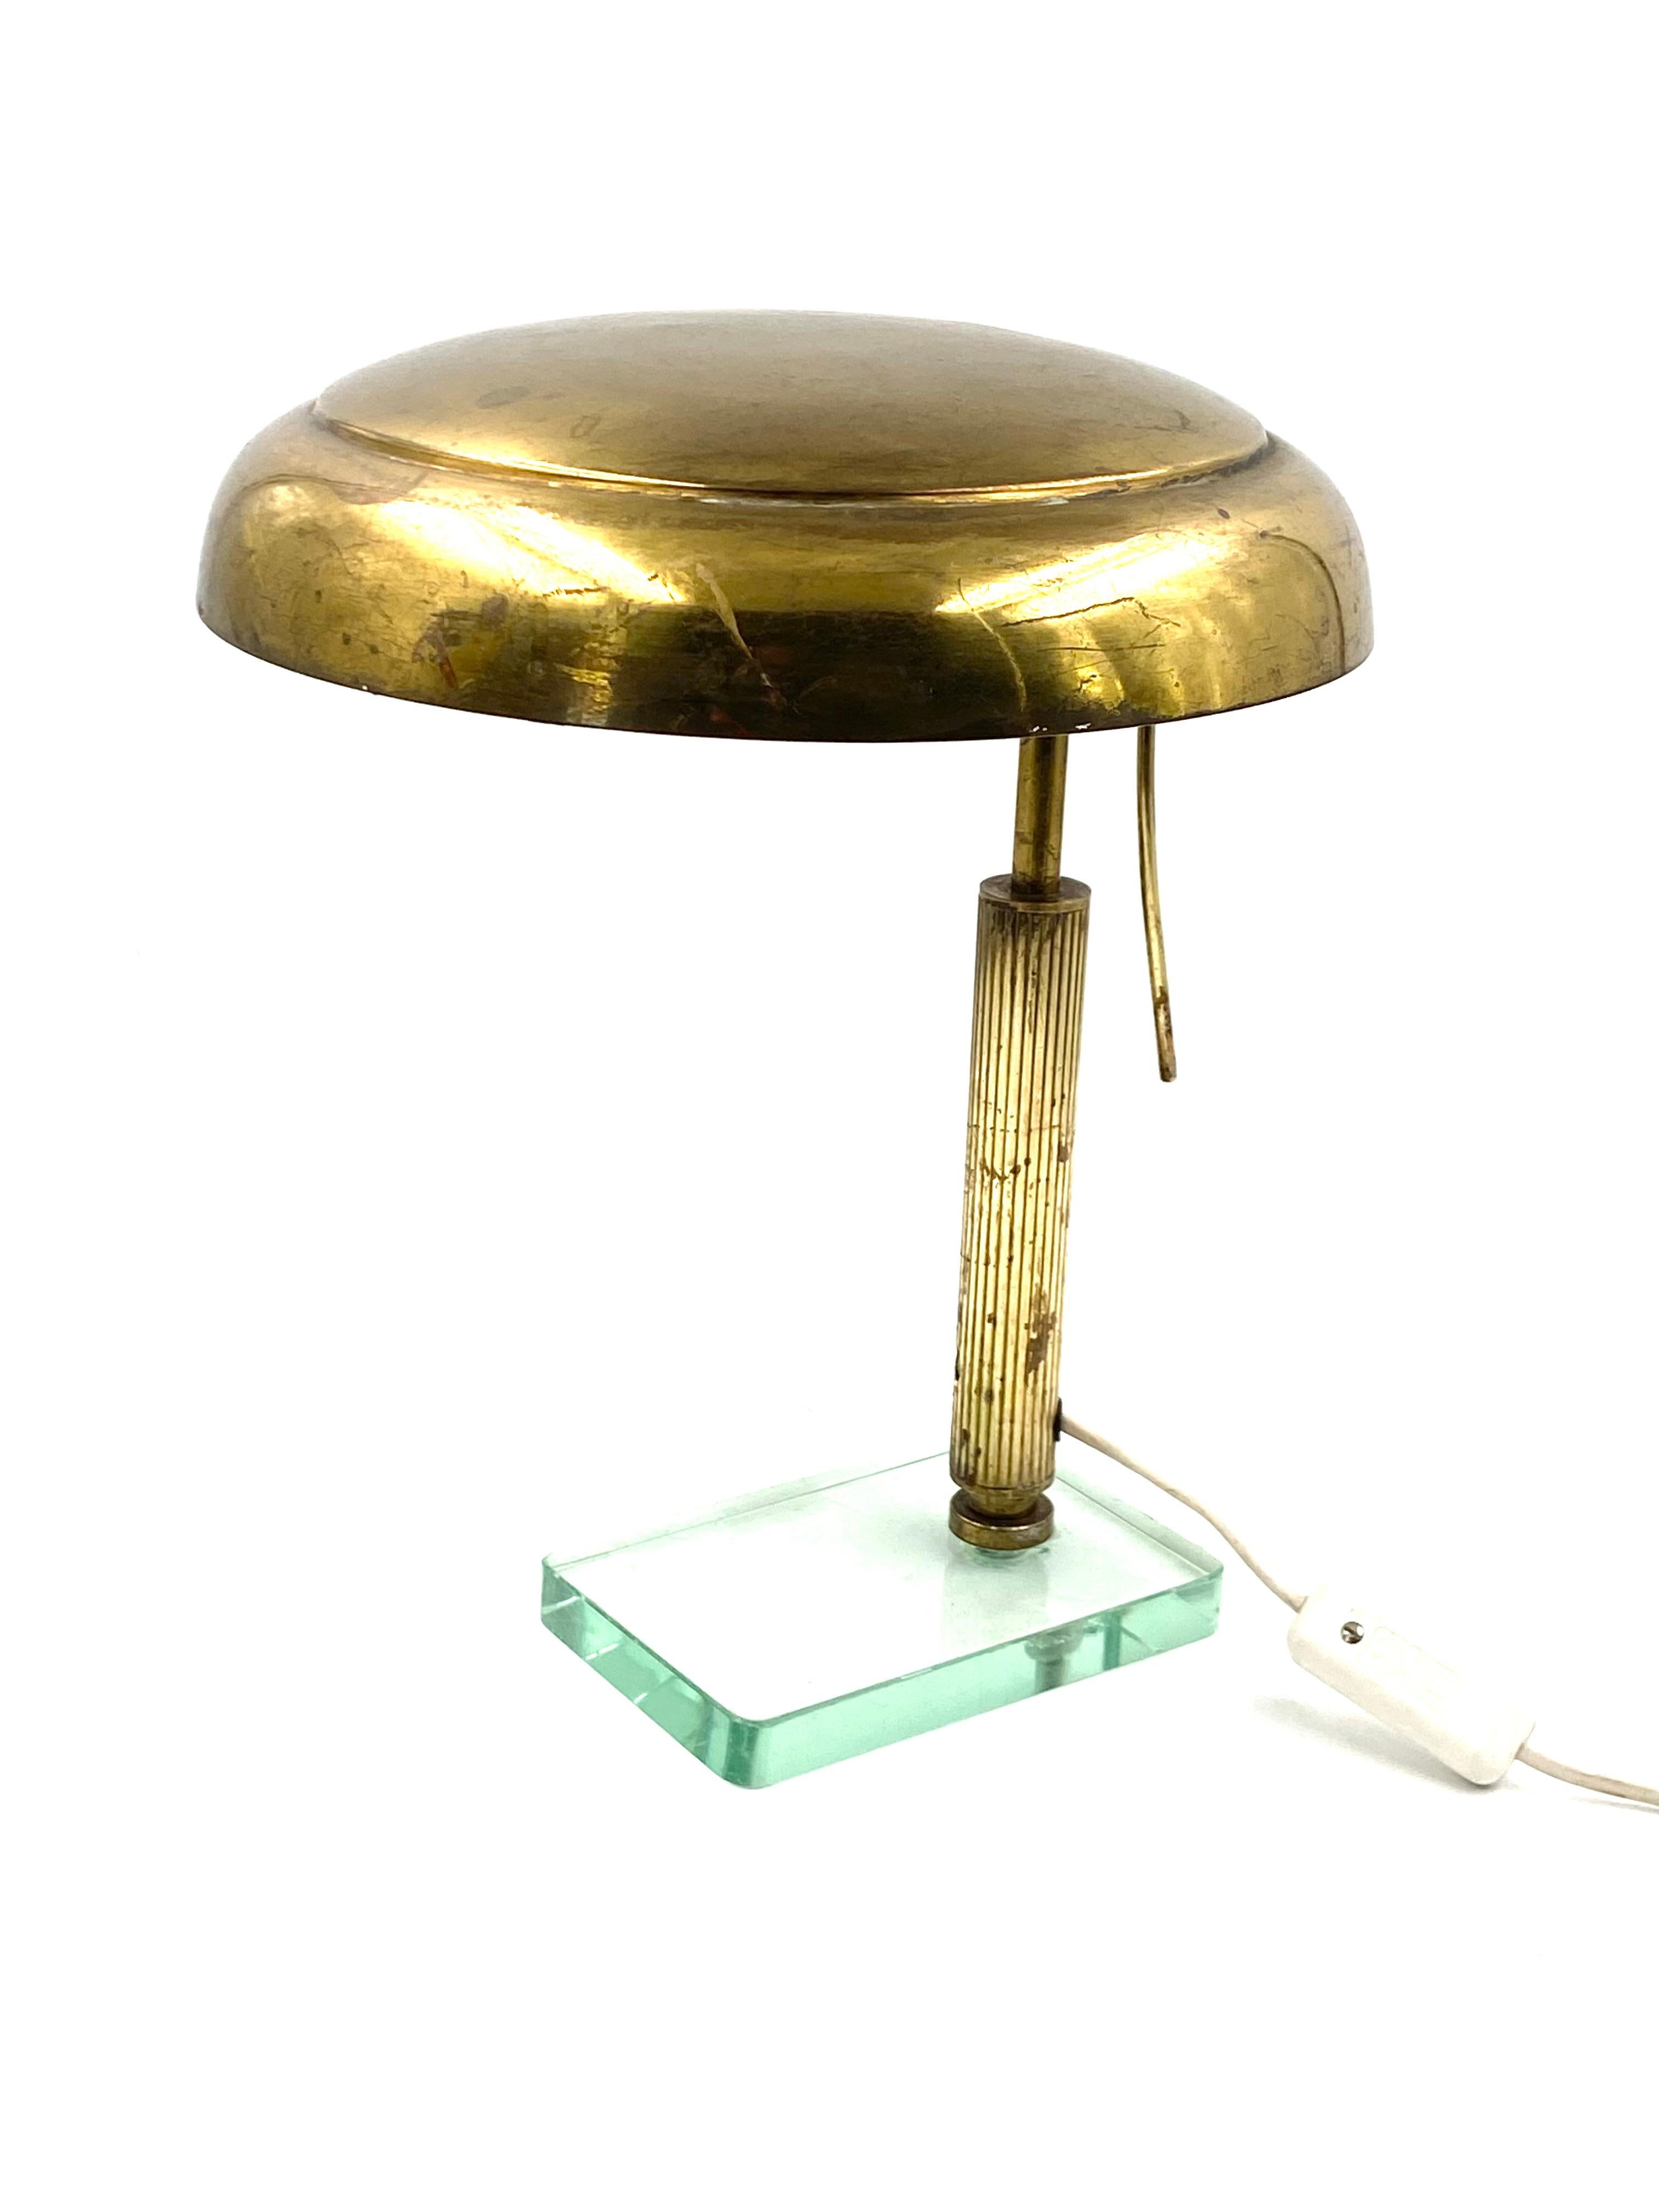 Pietro Chiesa Attributed., Brass Table / Desk Lamp, Fontana Arte, circa 1940 For Sale 9